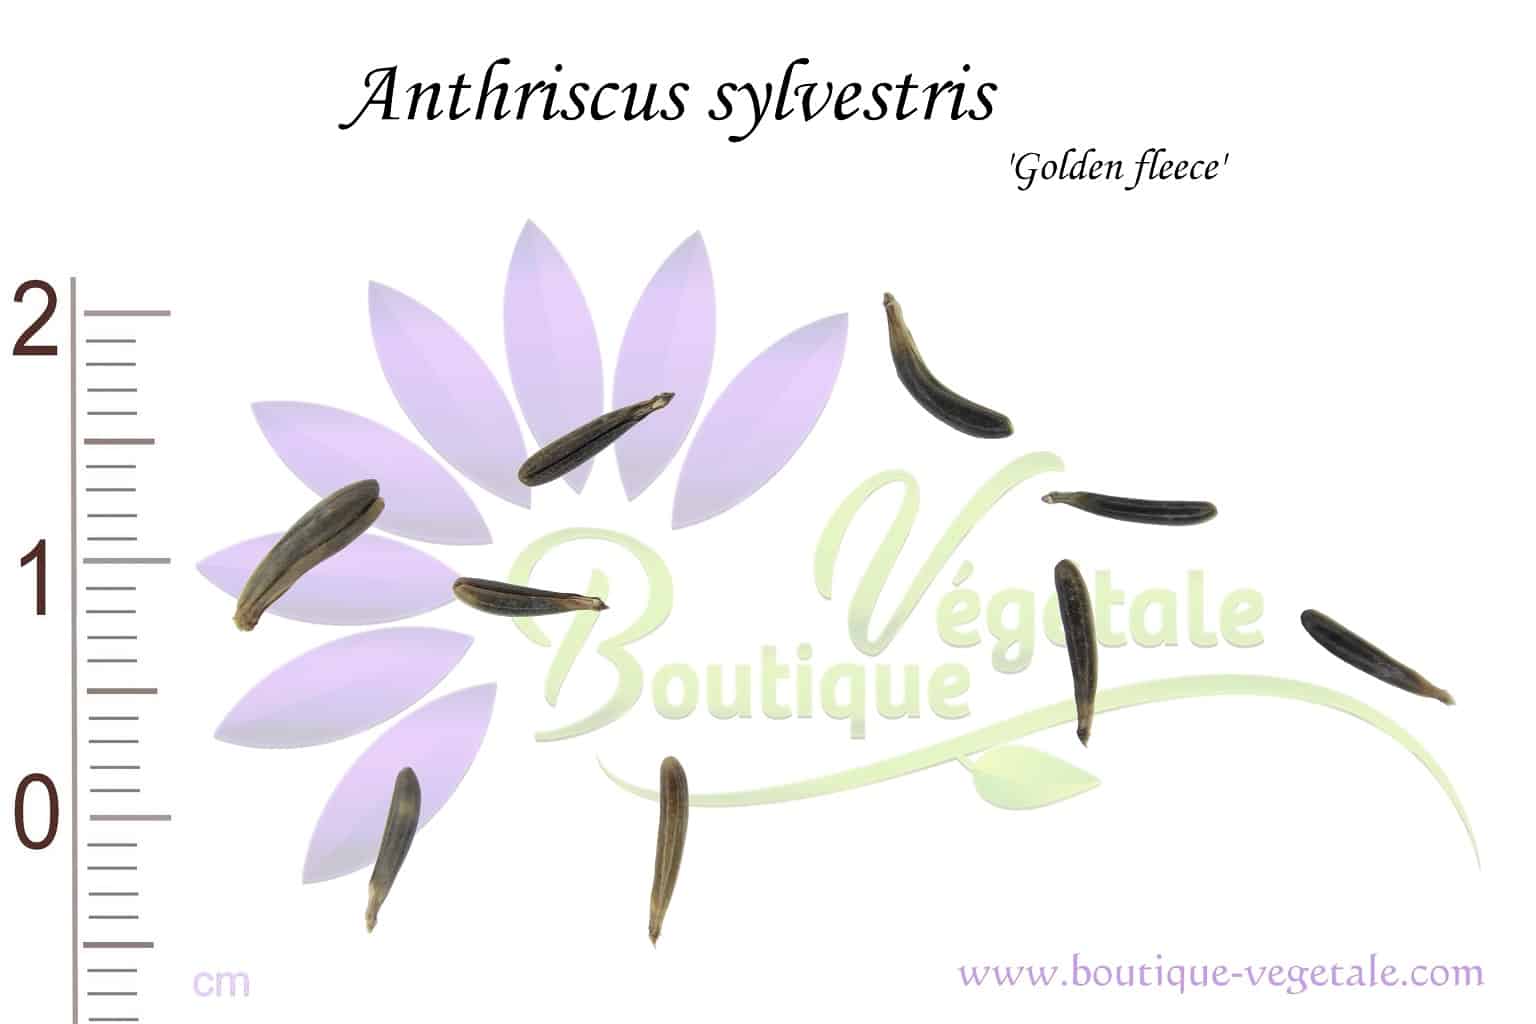 Graines d'Anthriscus sylvestris 'Golden fleece', Anthriscus sylvestris 'Golden fleece' seeds